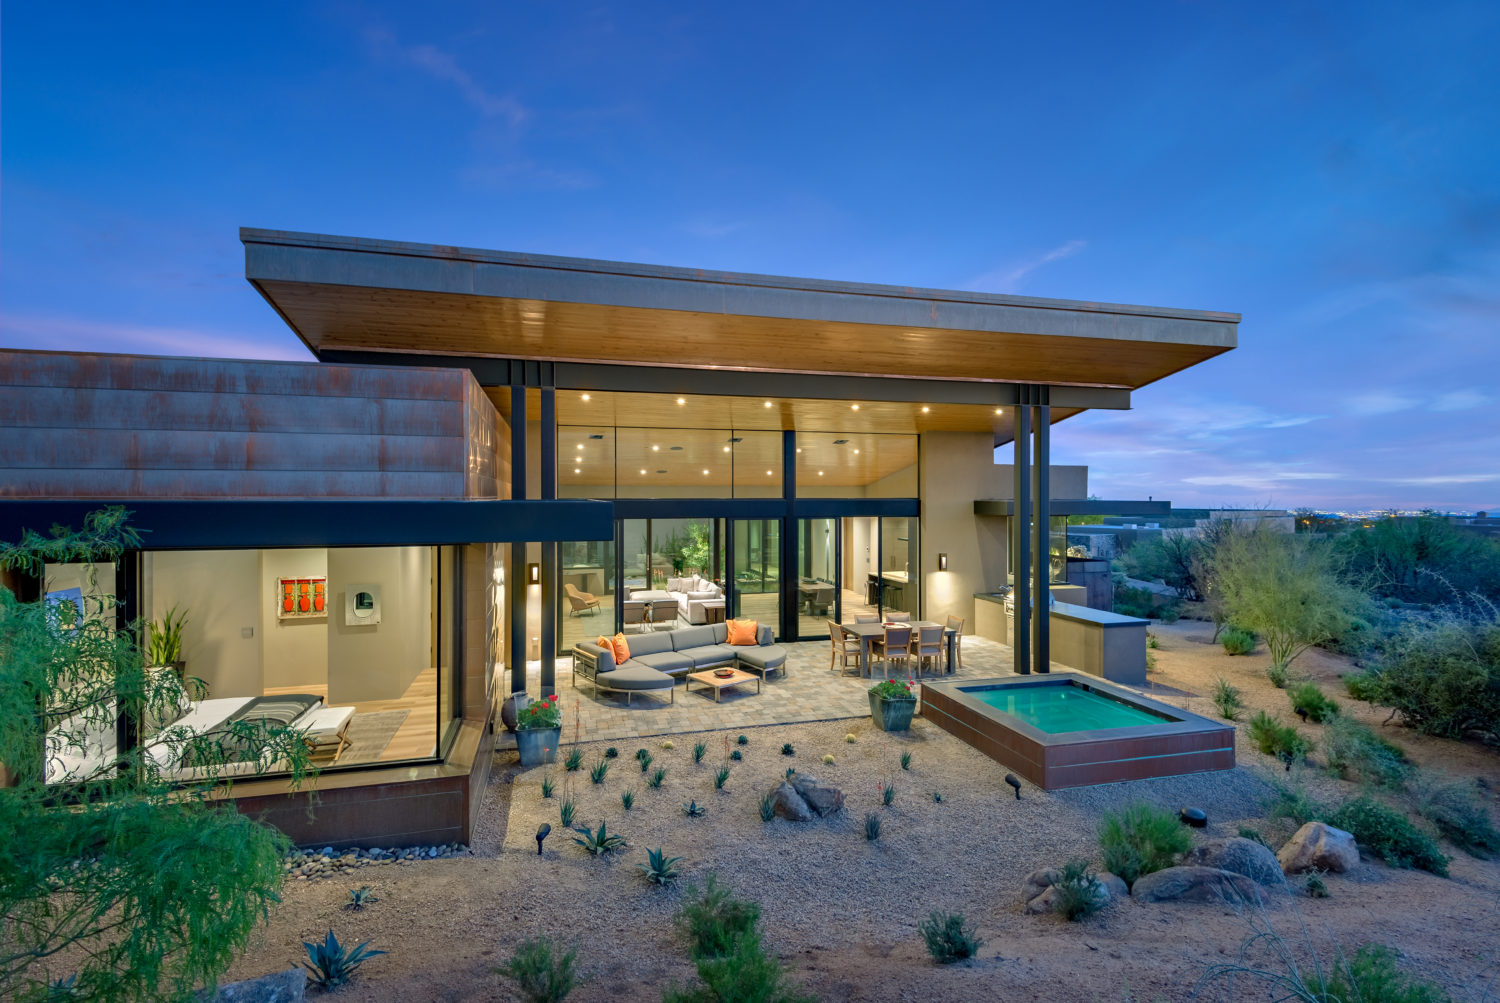 Interior Design Inspo of the Week: Desert Mountain Home